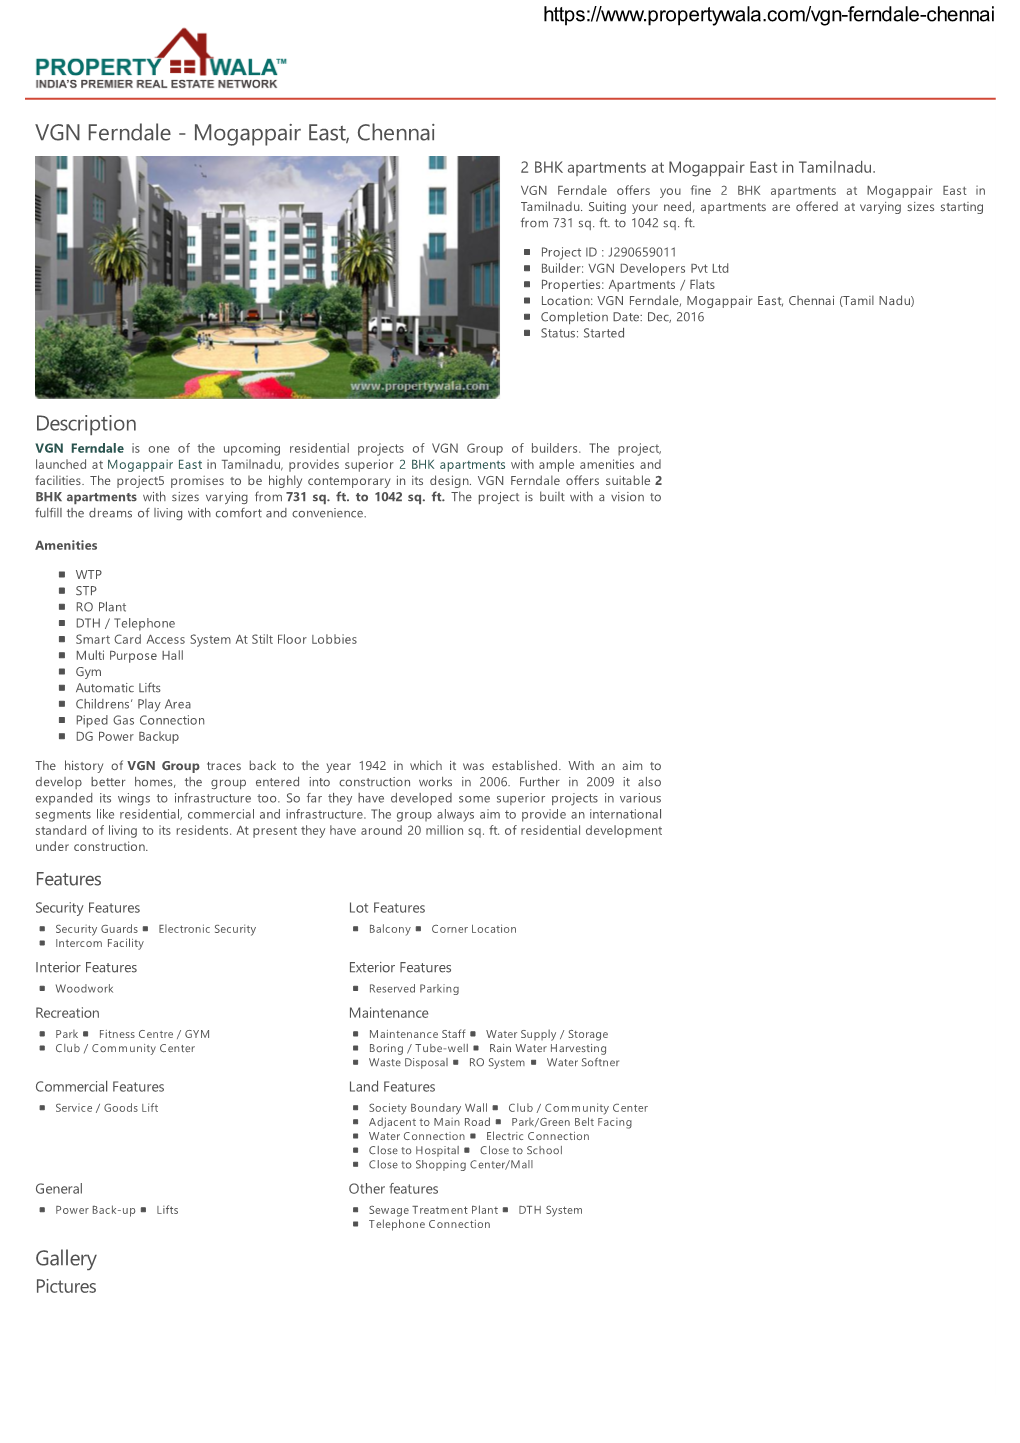 VGN Ferndale - Mogappair East, Chennai 2 BHK Apartments at Mogappair East in Tamilnadu